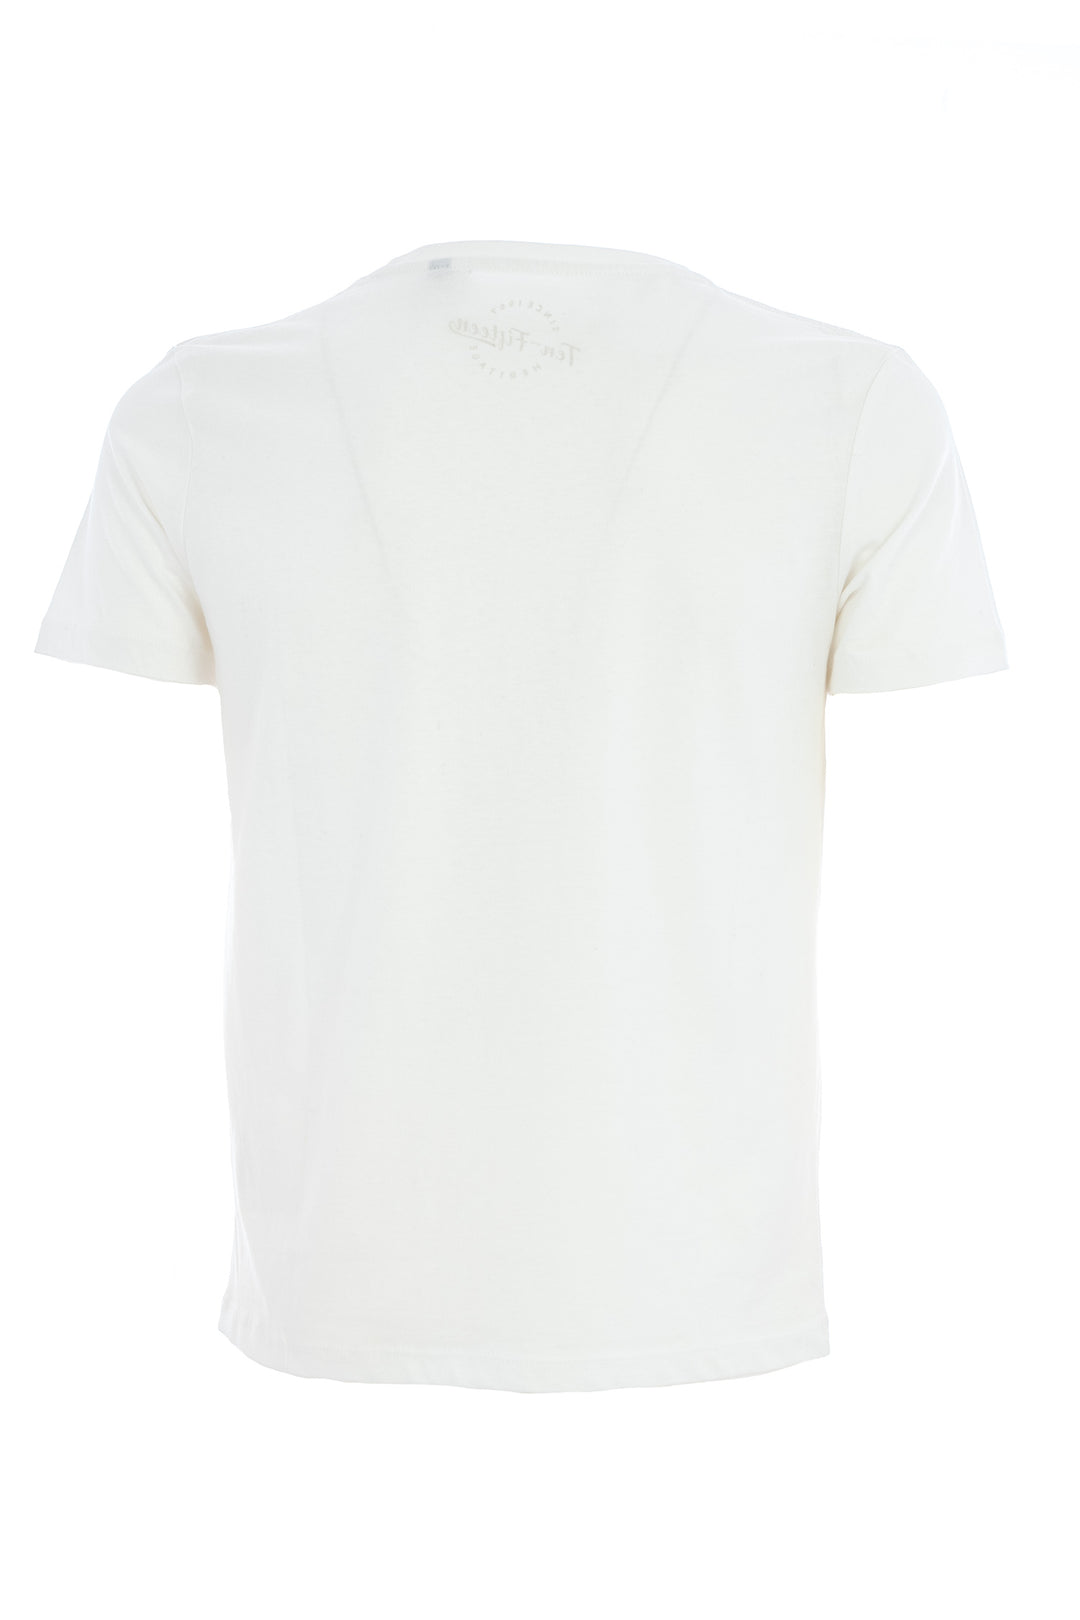 TEN-FIFTEEN T-shirt bianca in cotone con stampa positano - Mancinelli 1954